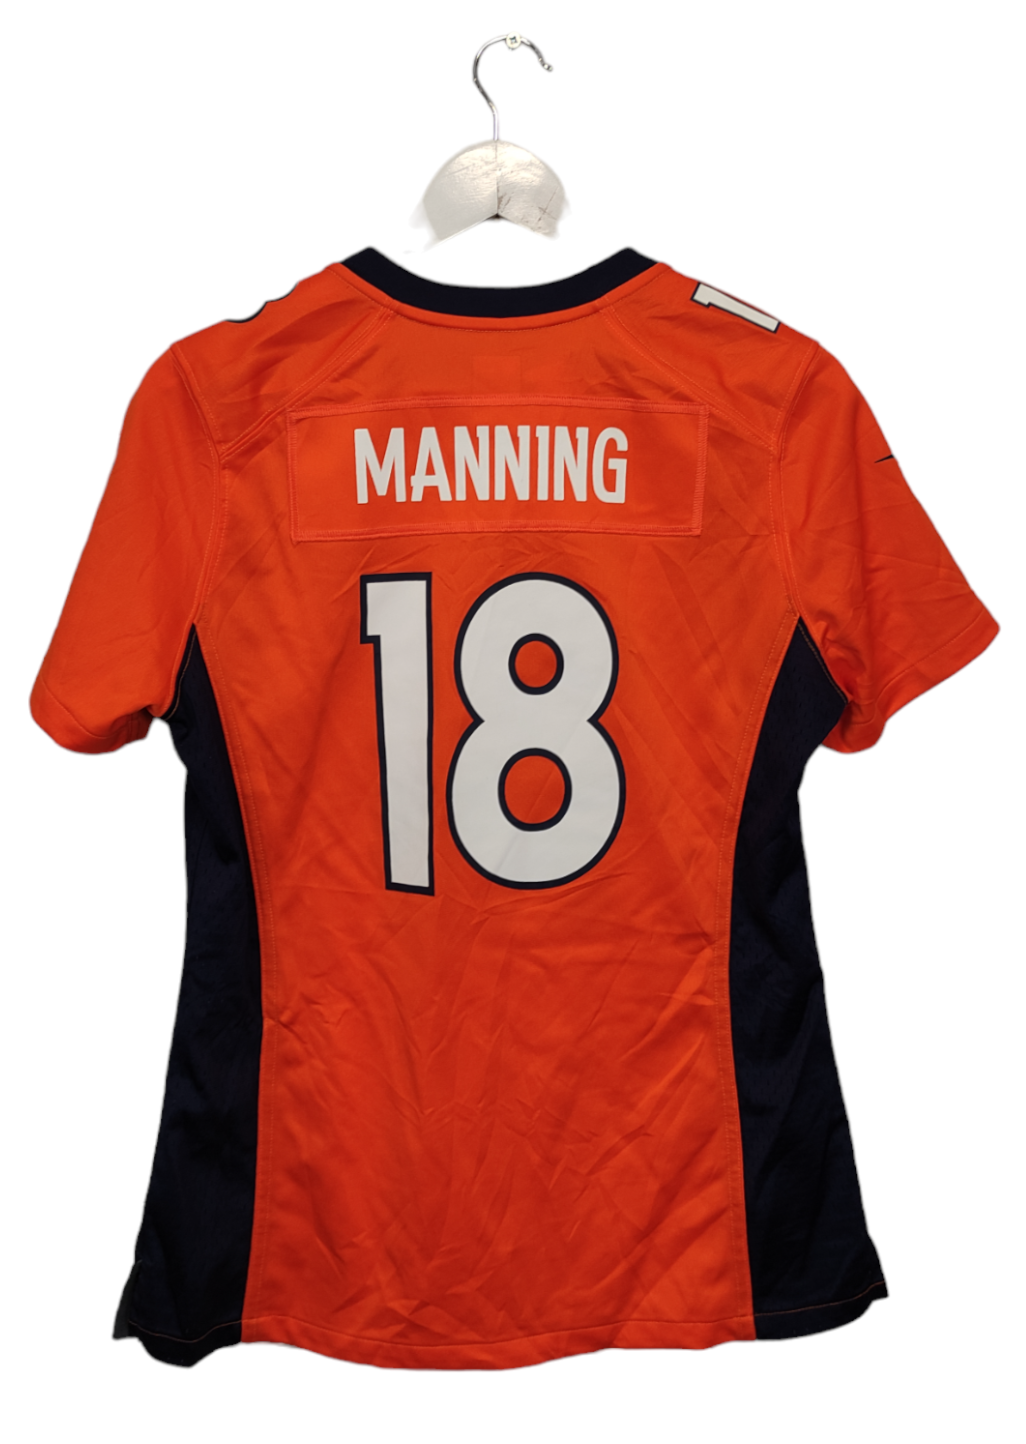 Top Branded, Γυναικεία Αθλητική Μπλούζα NFL σε Πορτοκαλί Χρώμα (Small)